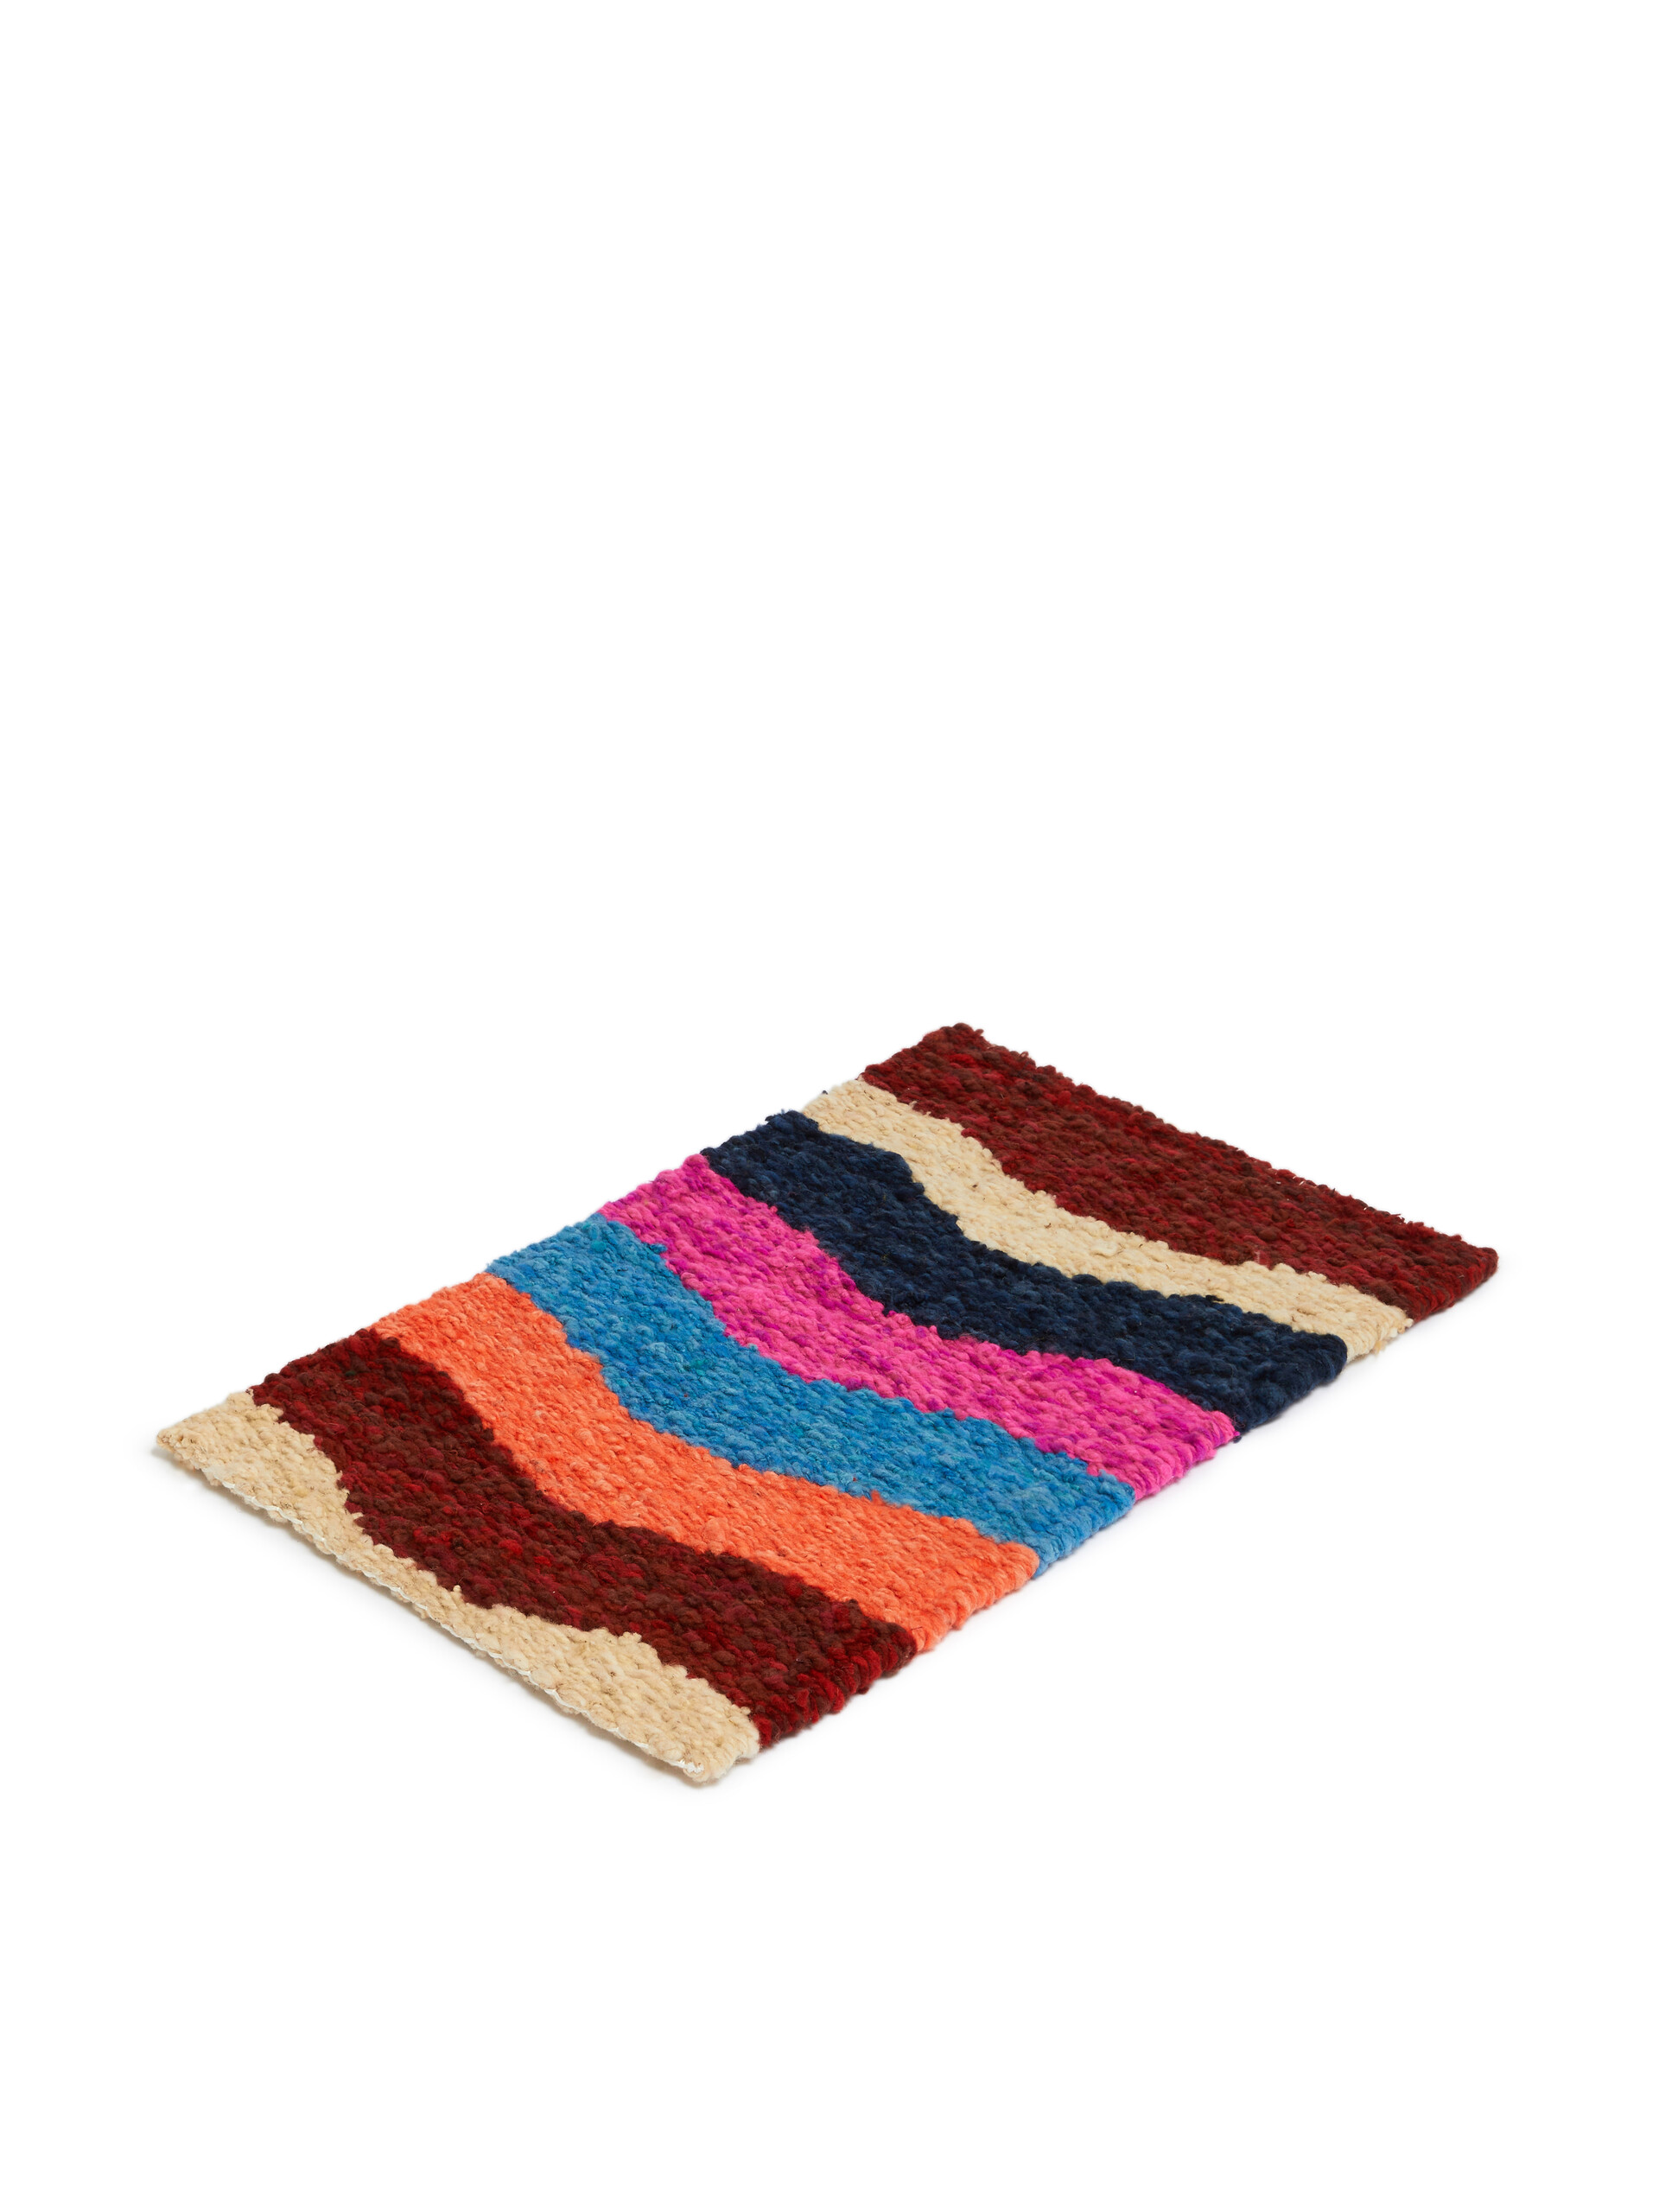 Petit tapis Marni Market ondulé multicolore - Mobilier - Image 2